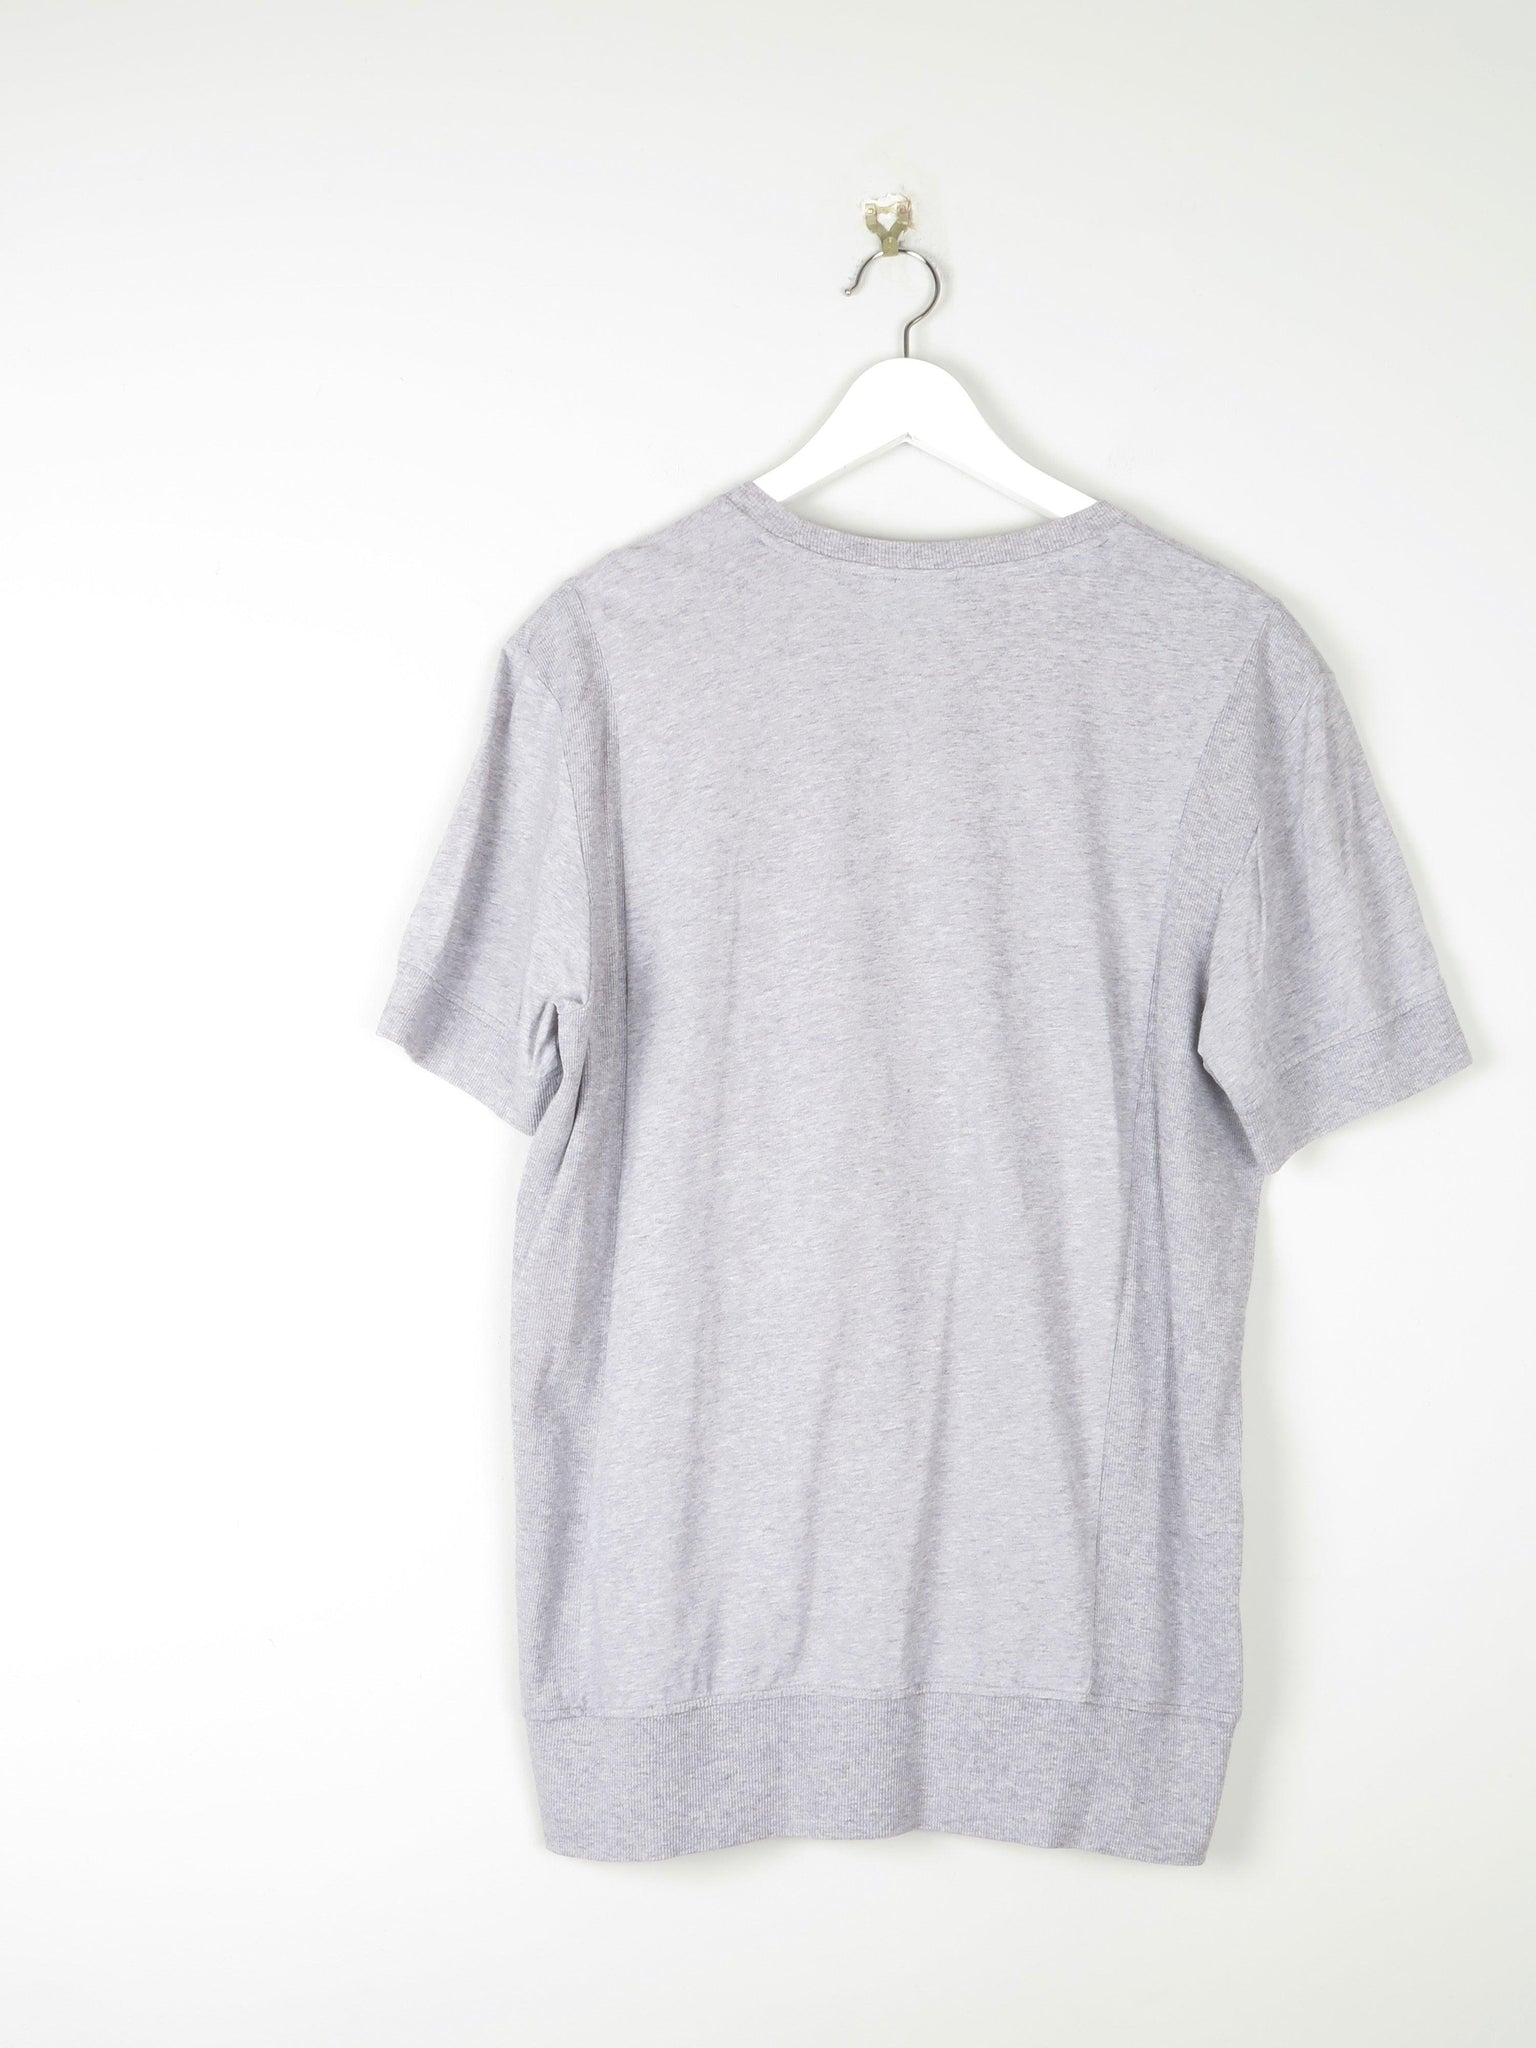 Men's Adidas Grey T-shirt L - The Harlequin